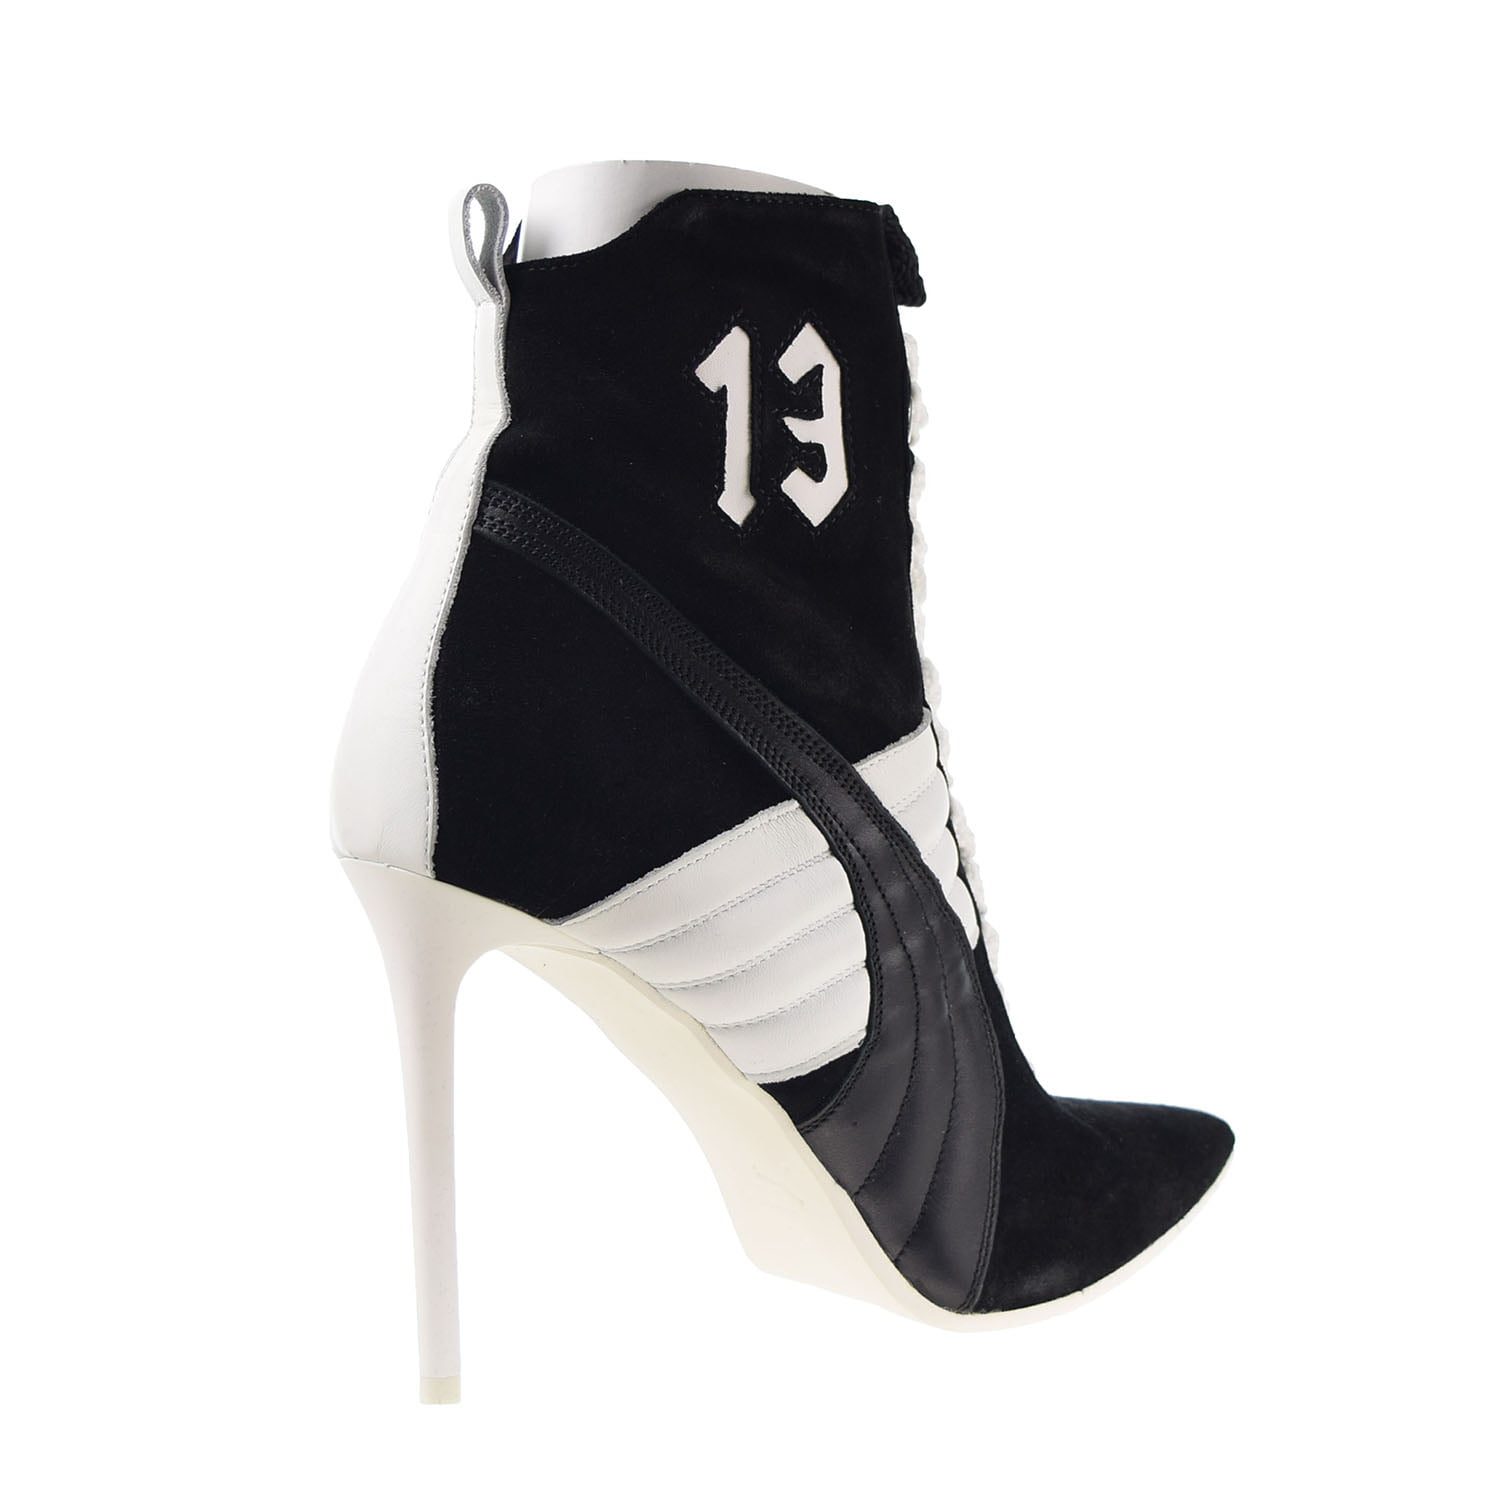 Puma High Heel Suede Rihanna Women's Shoes Black-White 363706-01 -